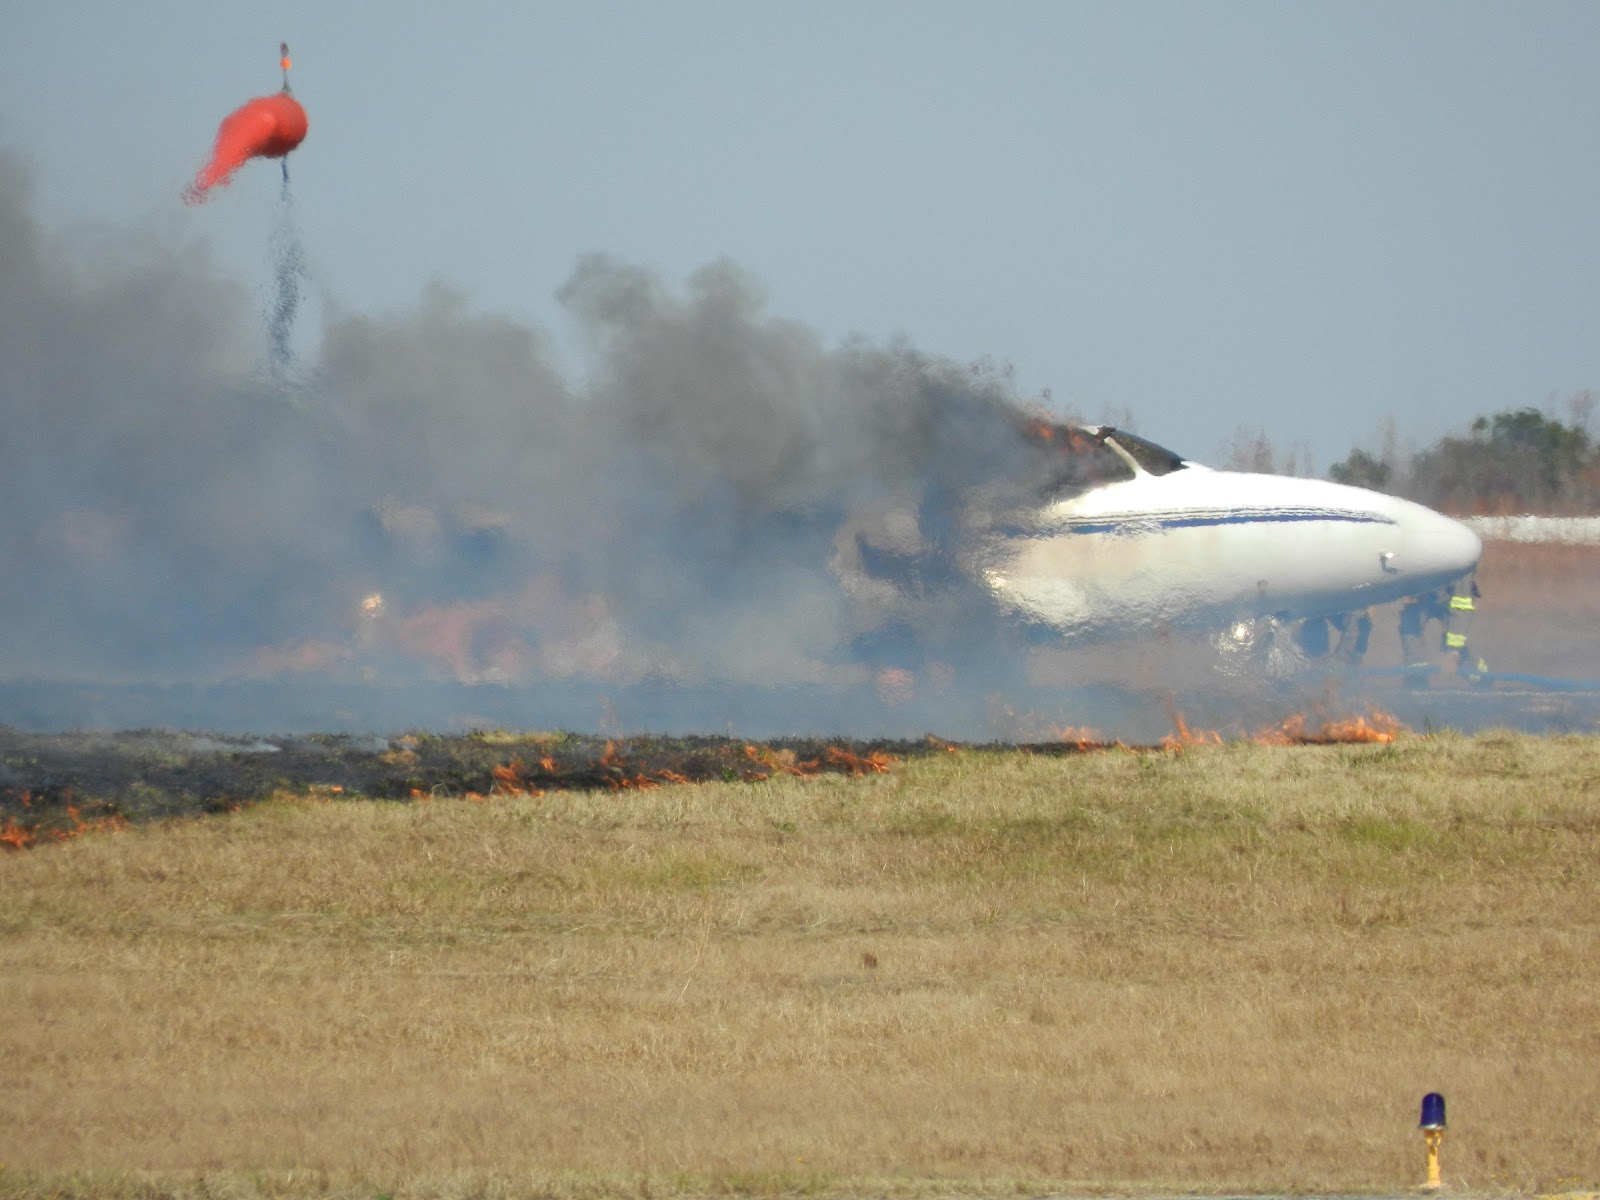 http://2.bp.blogspot.com/-1sHbUbvqdiQ/UKjm894lSZI/AAAAAAAAcsc/0S7XgJaZQ5o/s1600/greenwood-plane-crash-photos-taken-alfred-langley.jpg